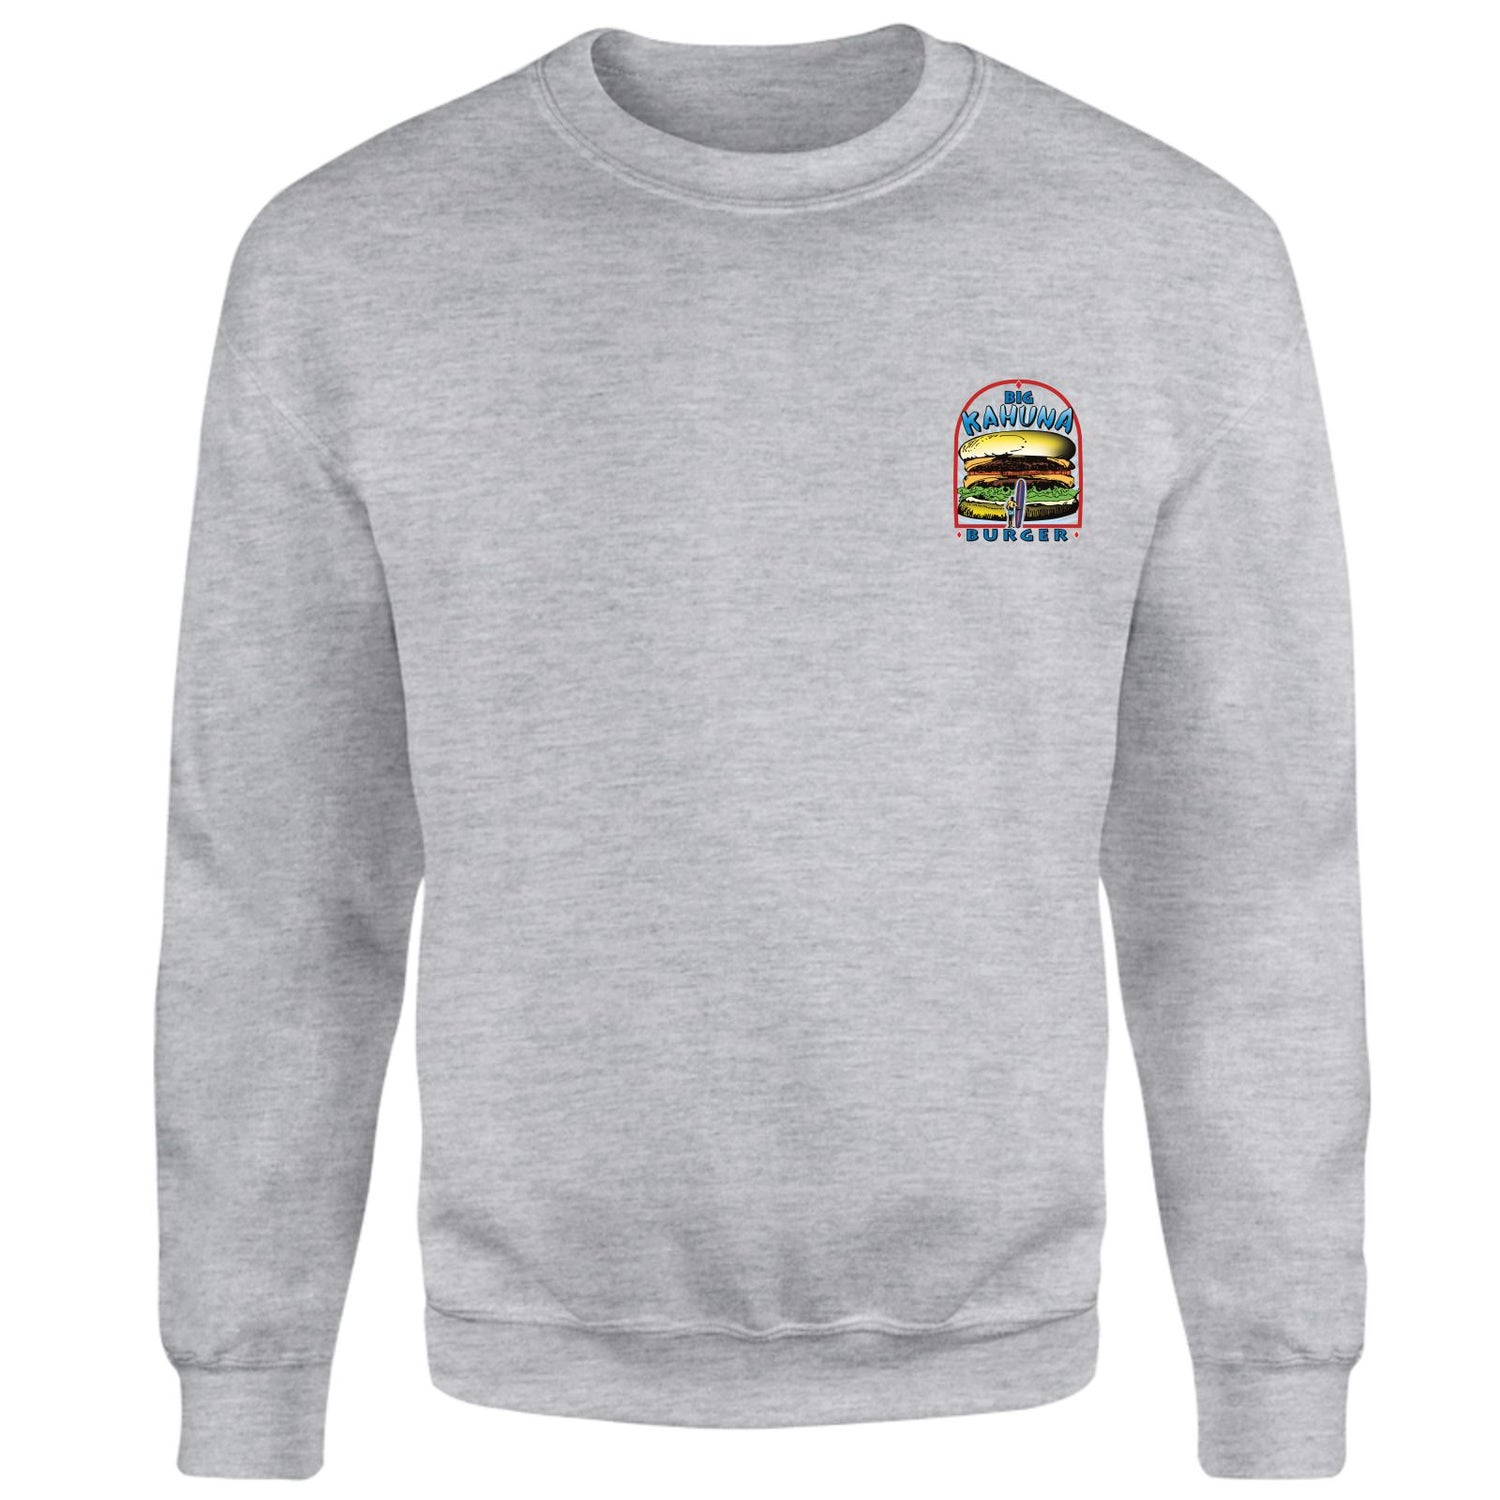 Pulp Fiction Big Kahuna Burger Sweatshirt - Grey